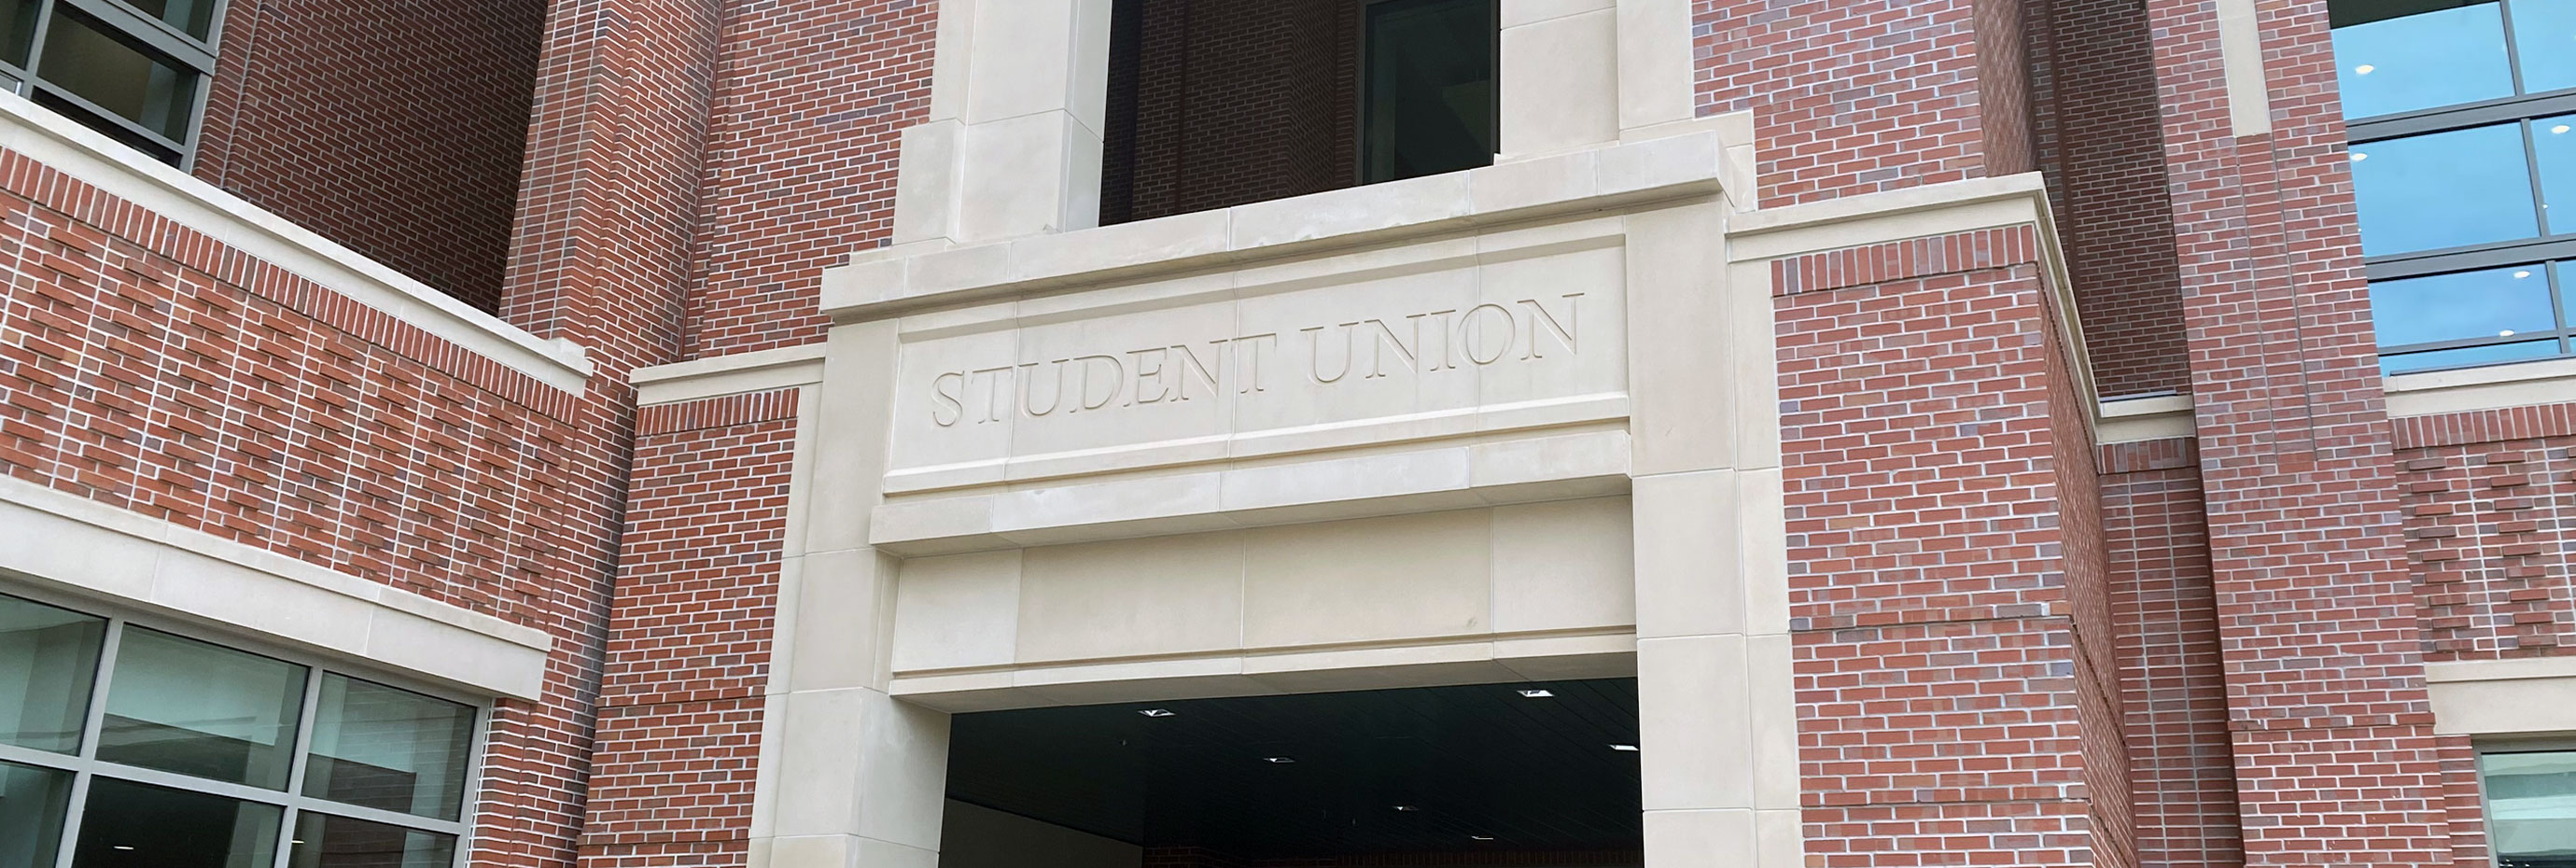 FSU Student Union